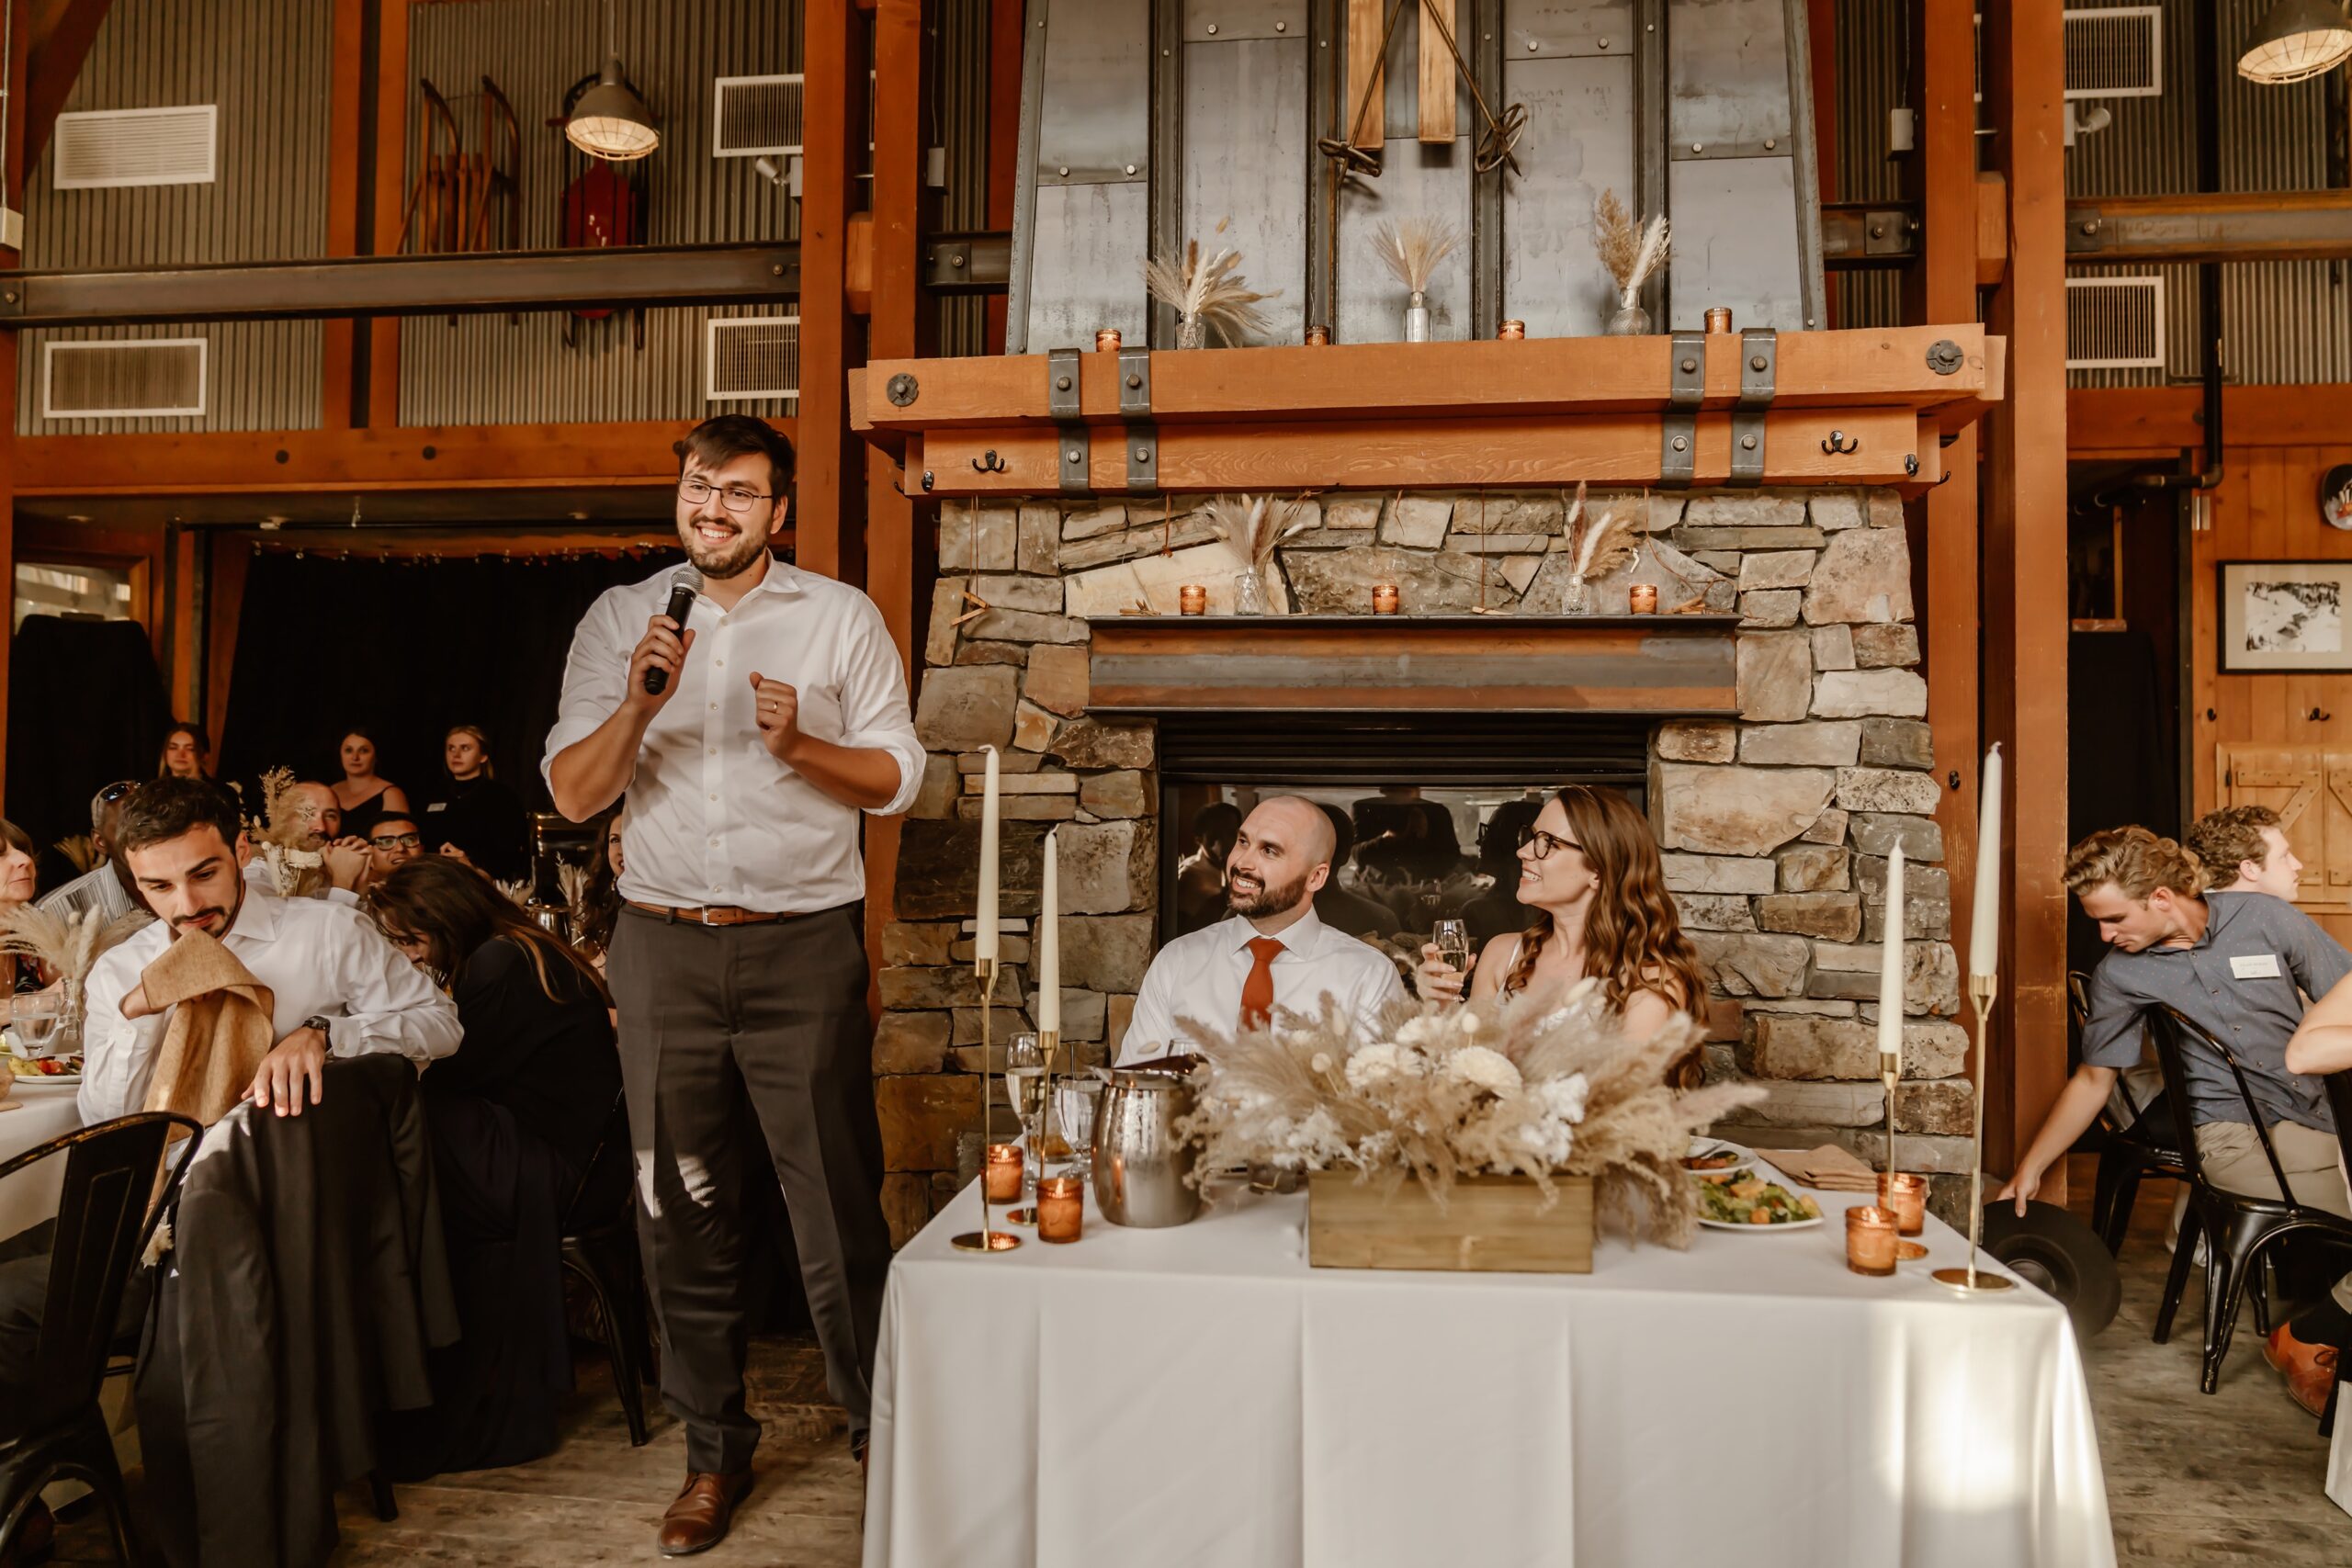 Wedding toasts at the Mammoth Lakes wedding reception